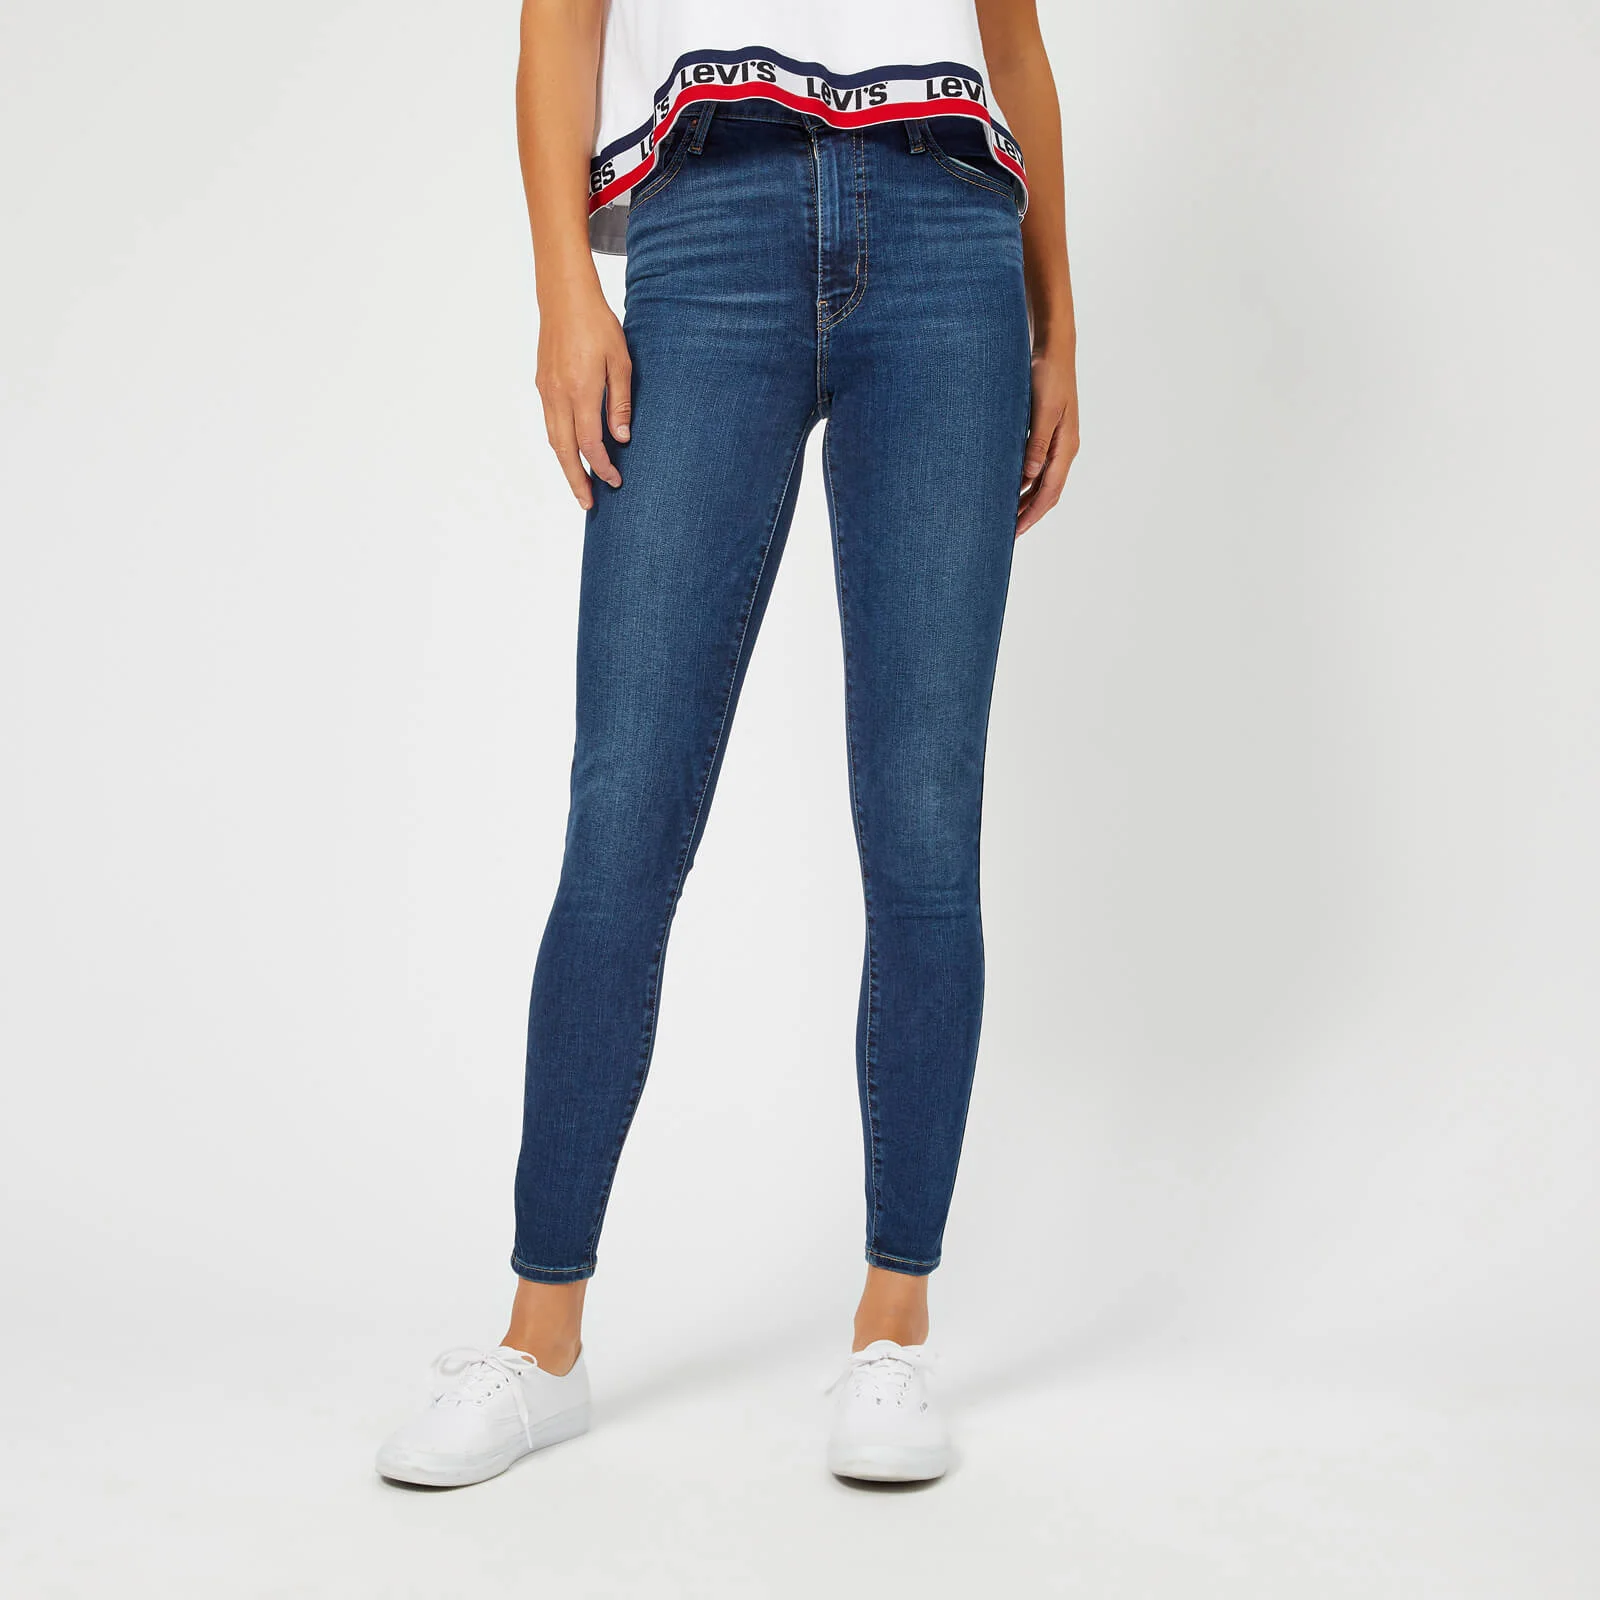 Levi's Women's Mile High Super Skinny Jeans - Breakthrough Blue Image 1